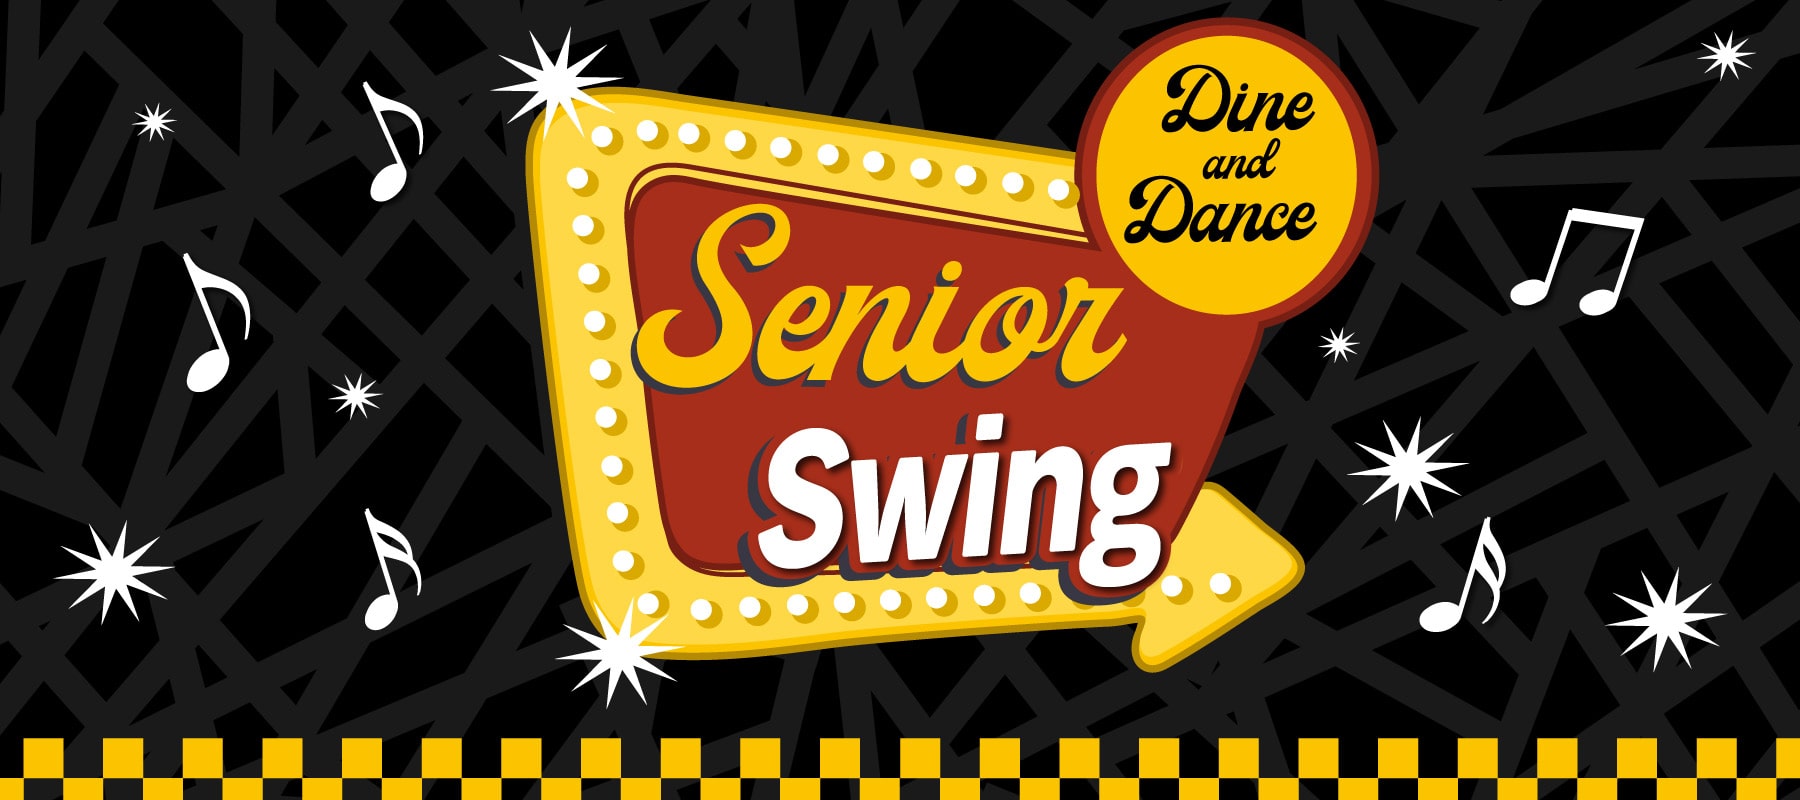 Senior Swing - Dine and Dance